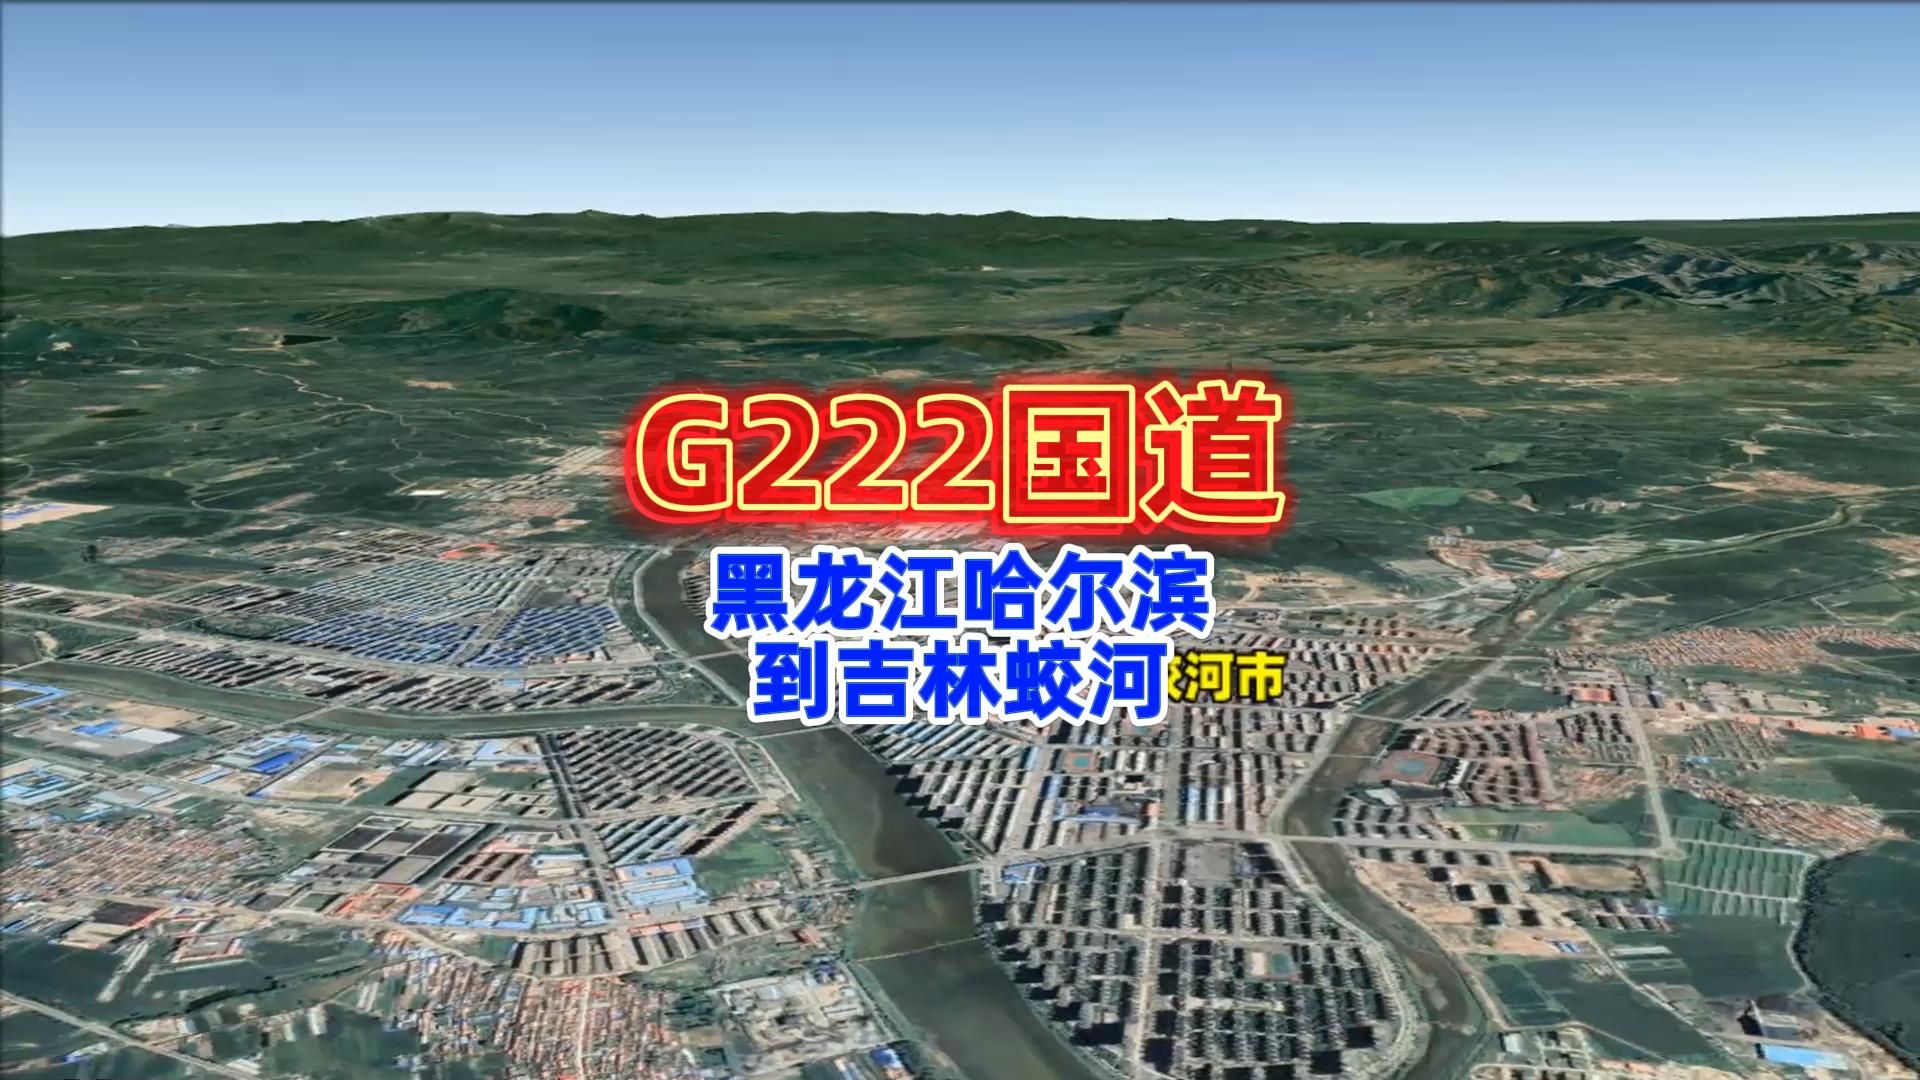 g222国道自驾游路线,黑龙江哈尔滨到吉林蛟河市,途经五常市,舒兰市